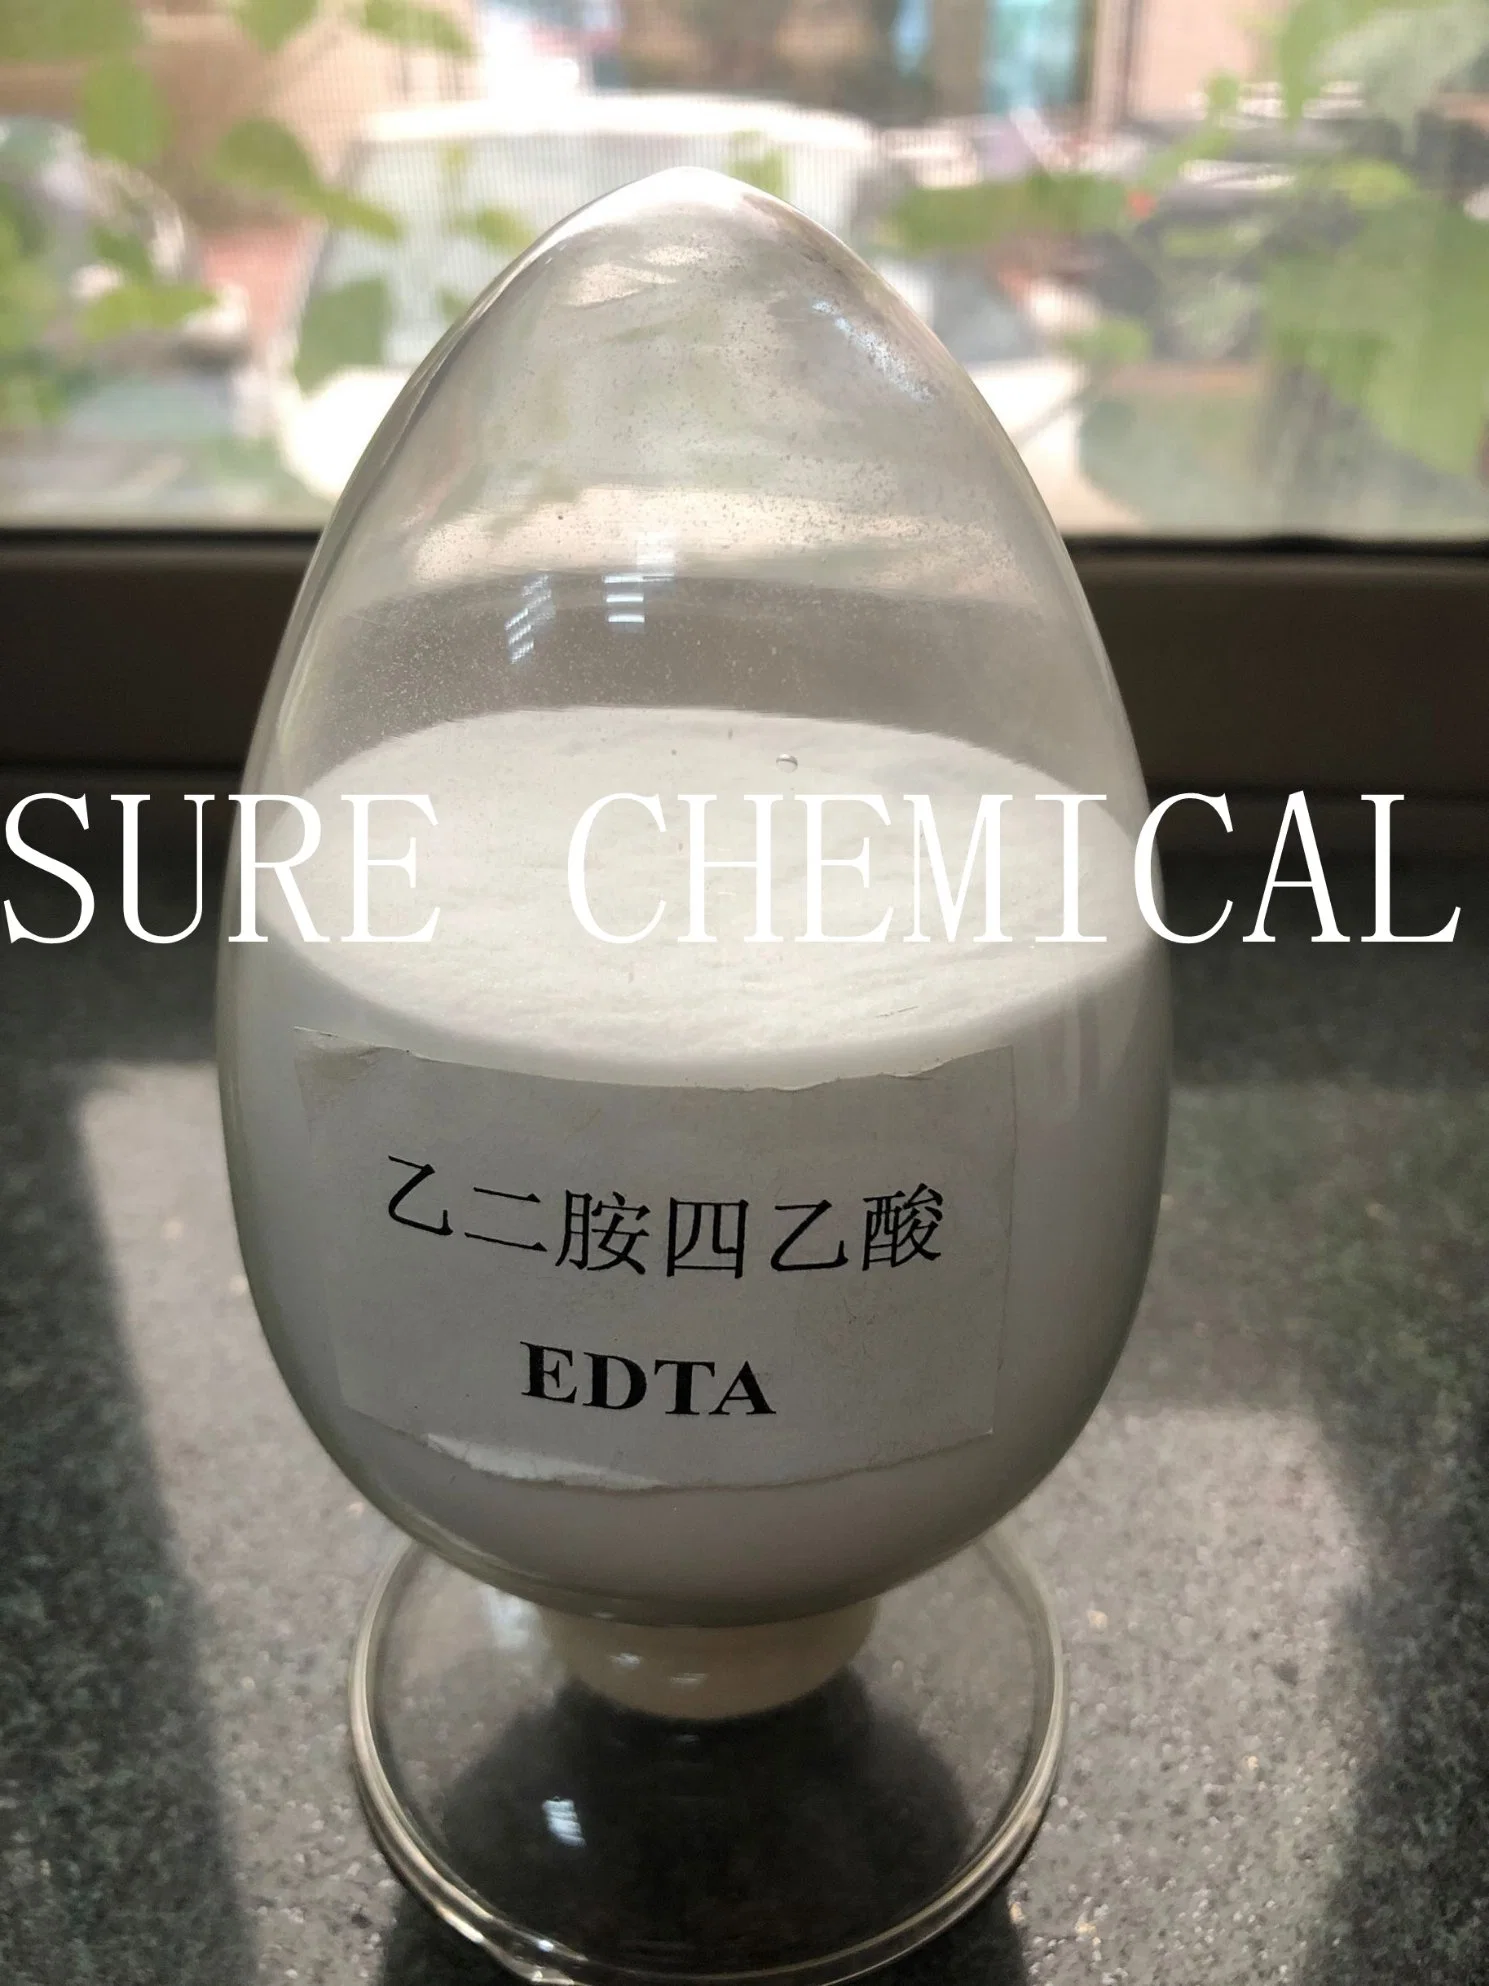 Factory Directly Supply EDTA Acid (Ethylene Diamine Tetraacetic Acid)